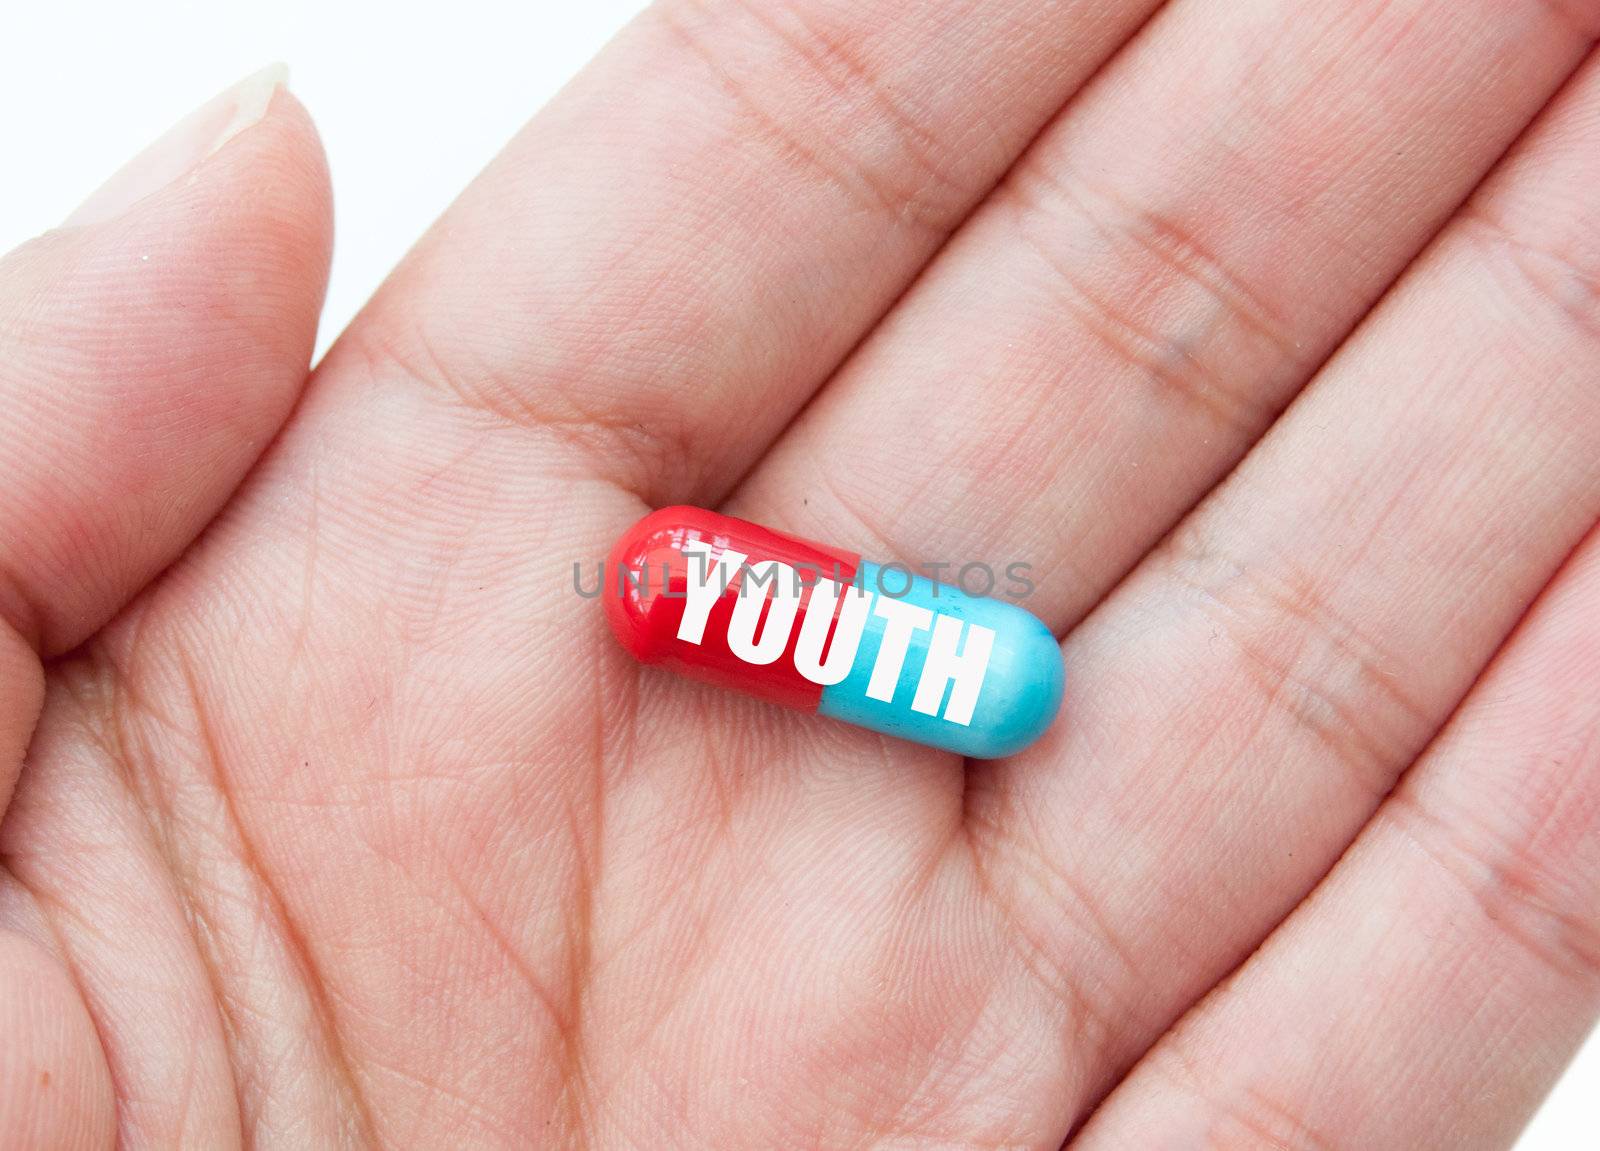 Pill of youth by unikpix